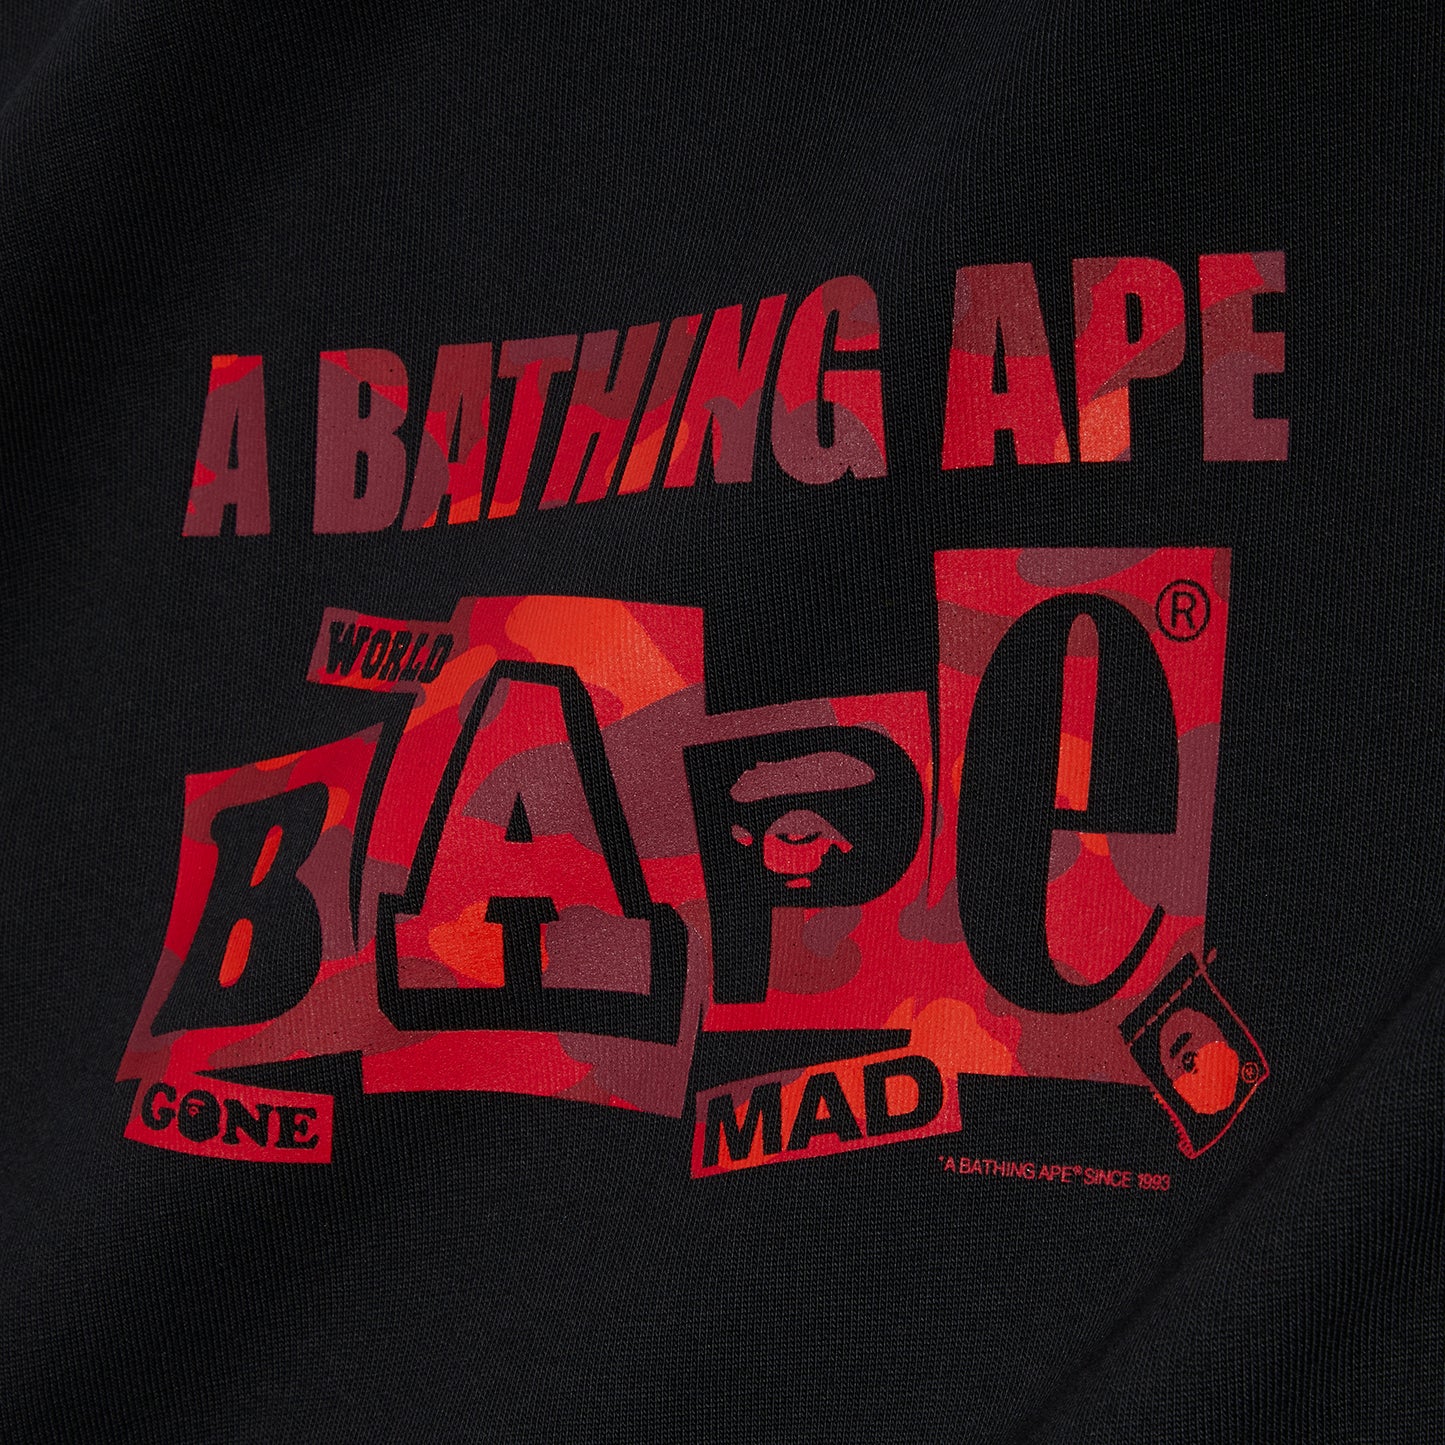 A Bathing Ape Bape Text Graphic Tee (Black)